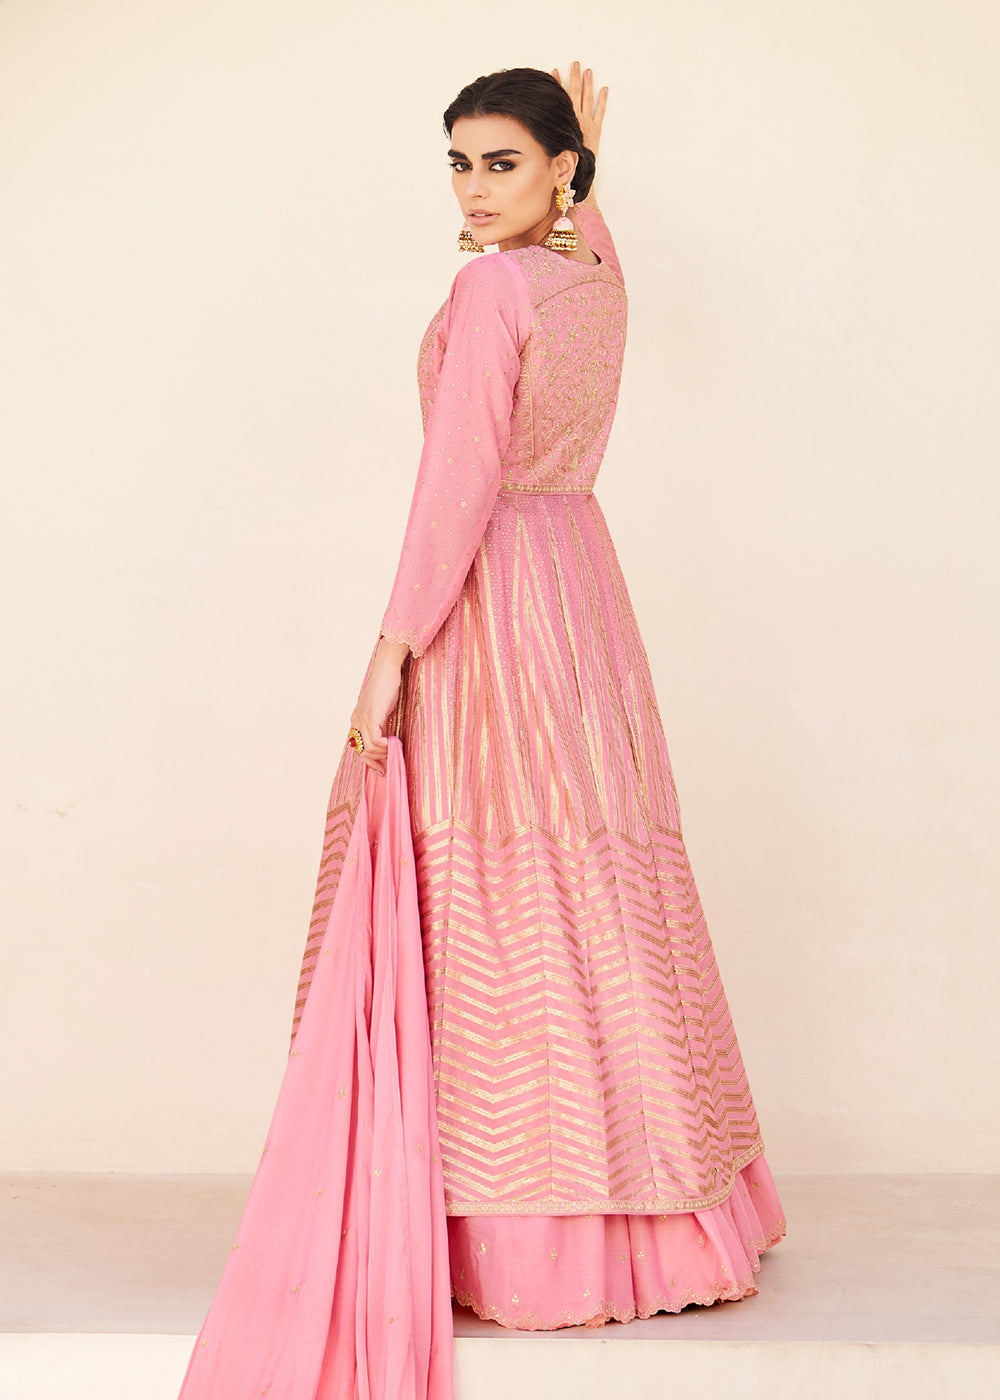 Buy Black Net Party Wear Anarkali Suit With Skirt Online - LSTV04592 |  Andaaz Fashion